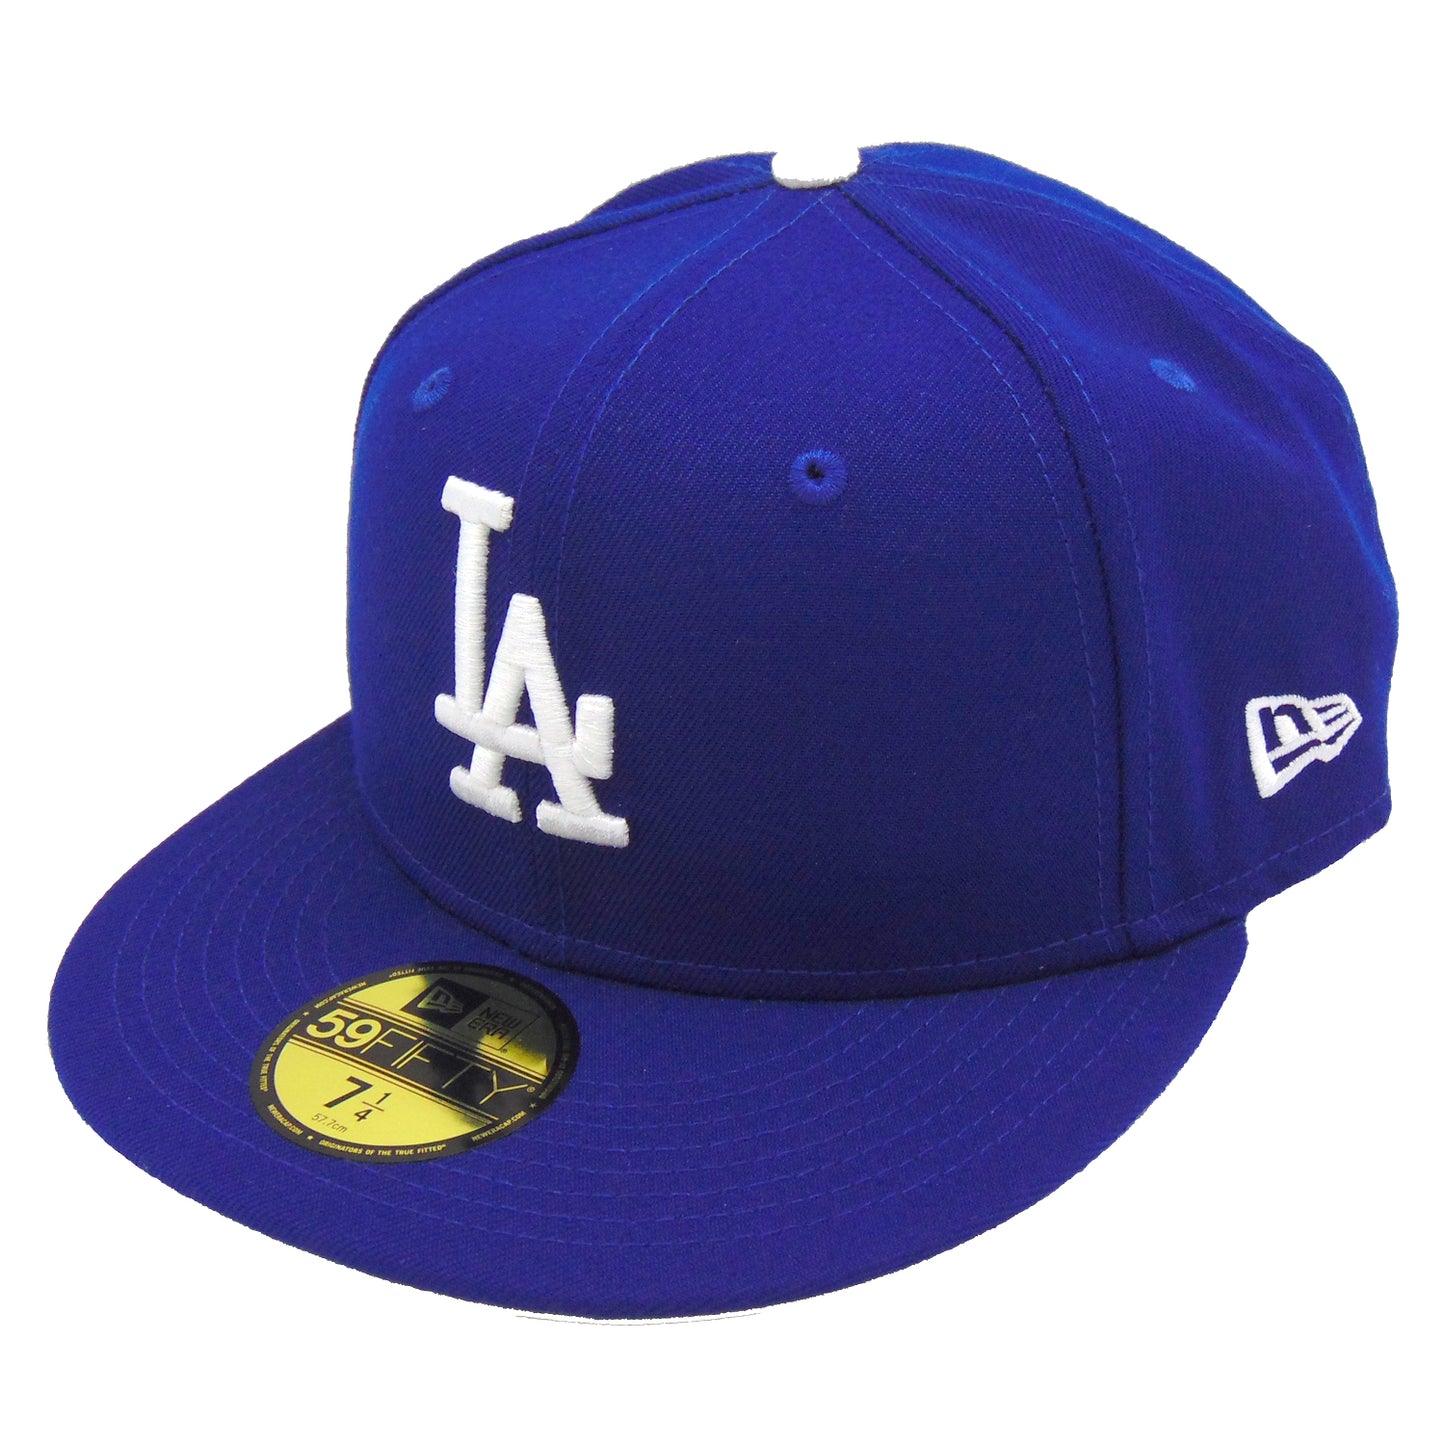 Los Angeles Dodgers Authentic New Era Cap Royal